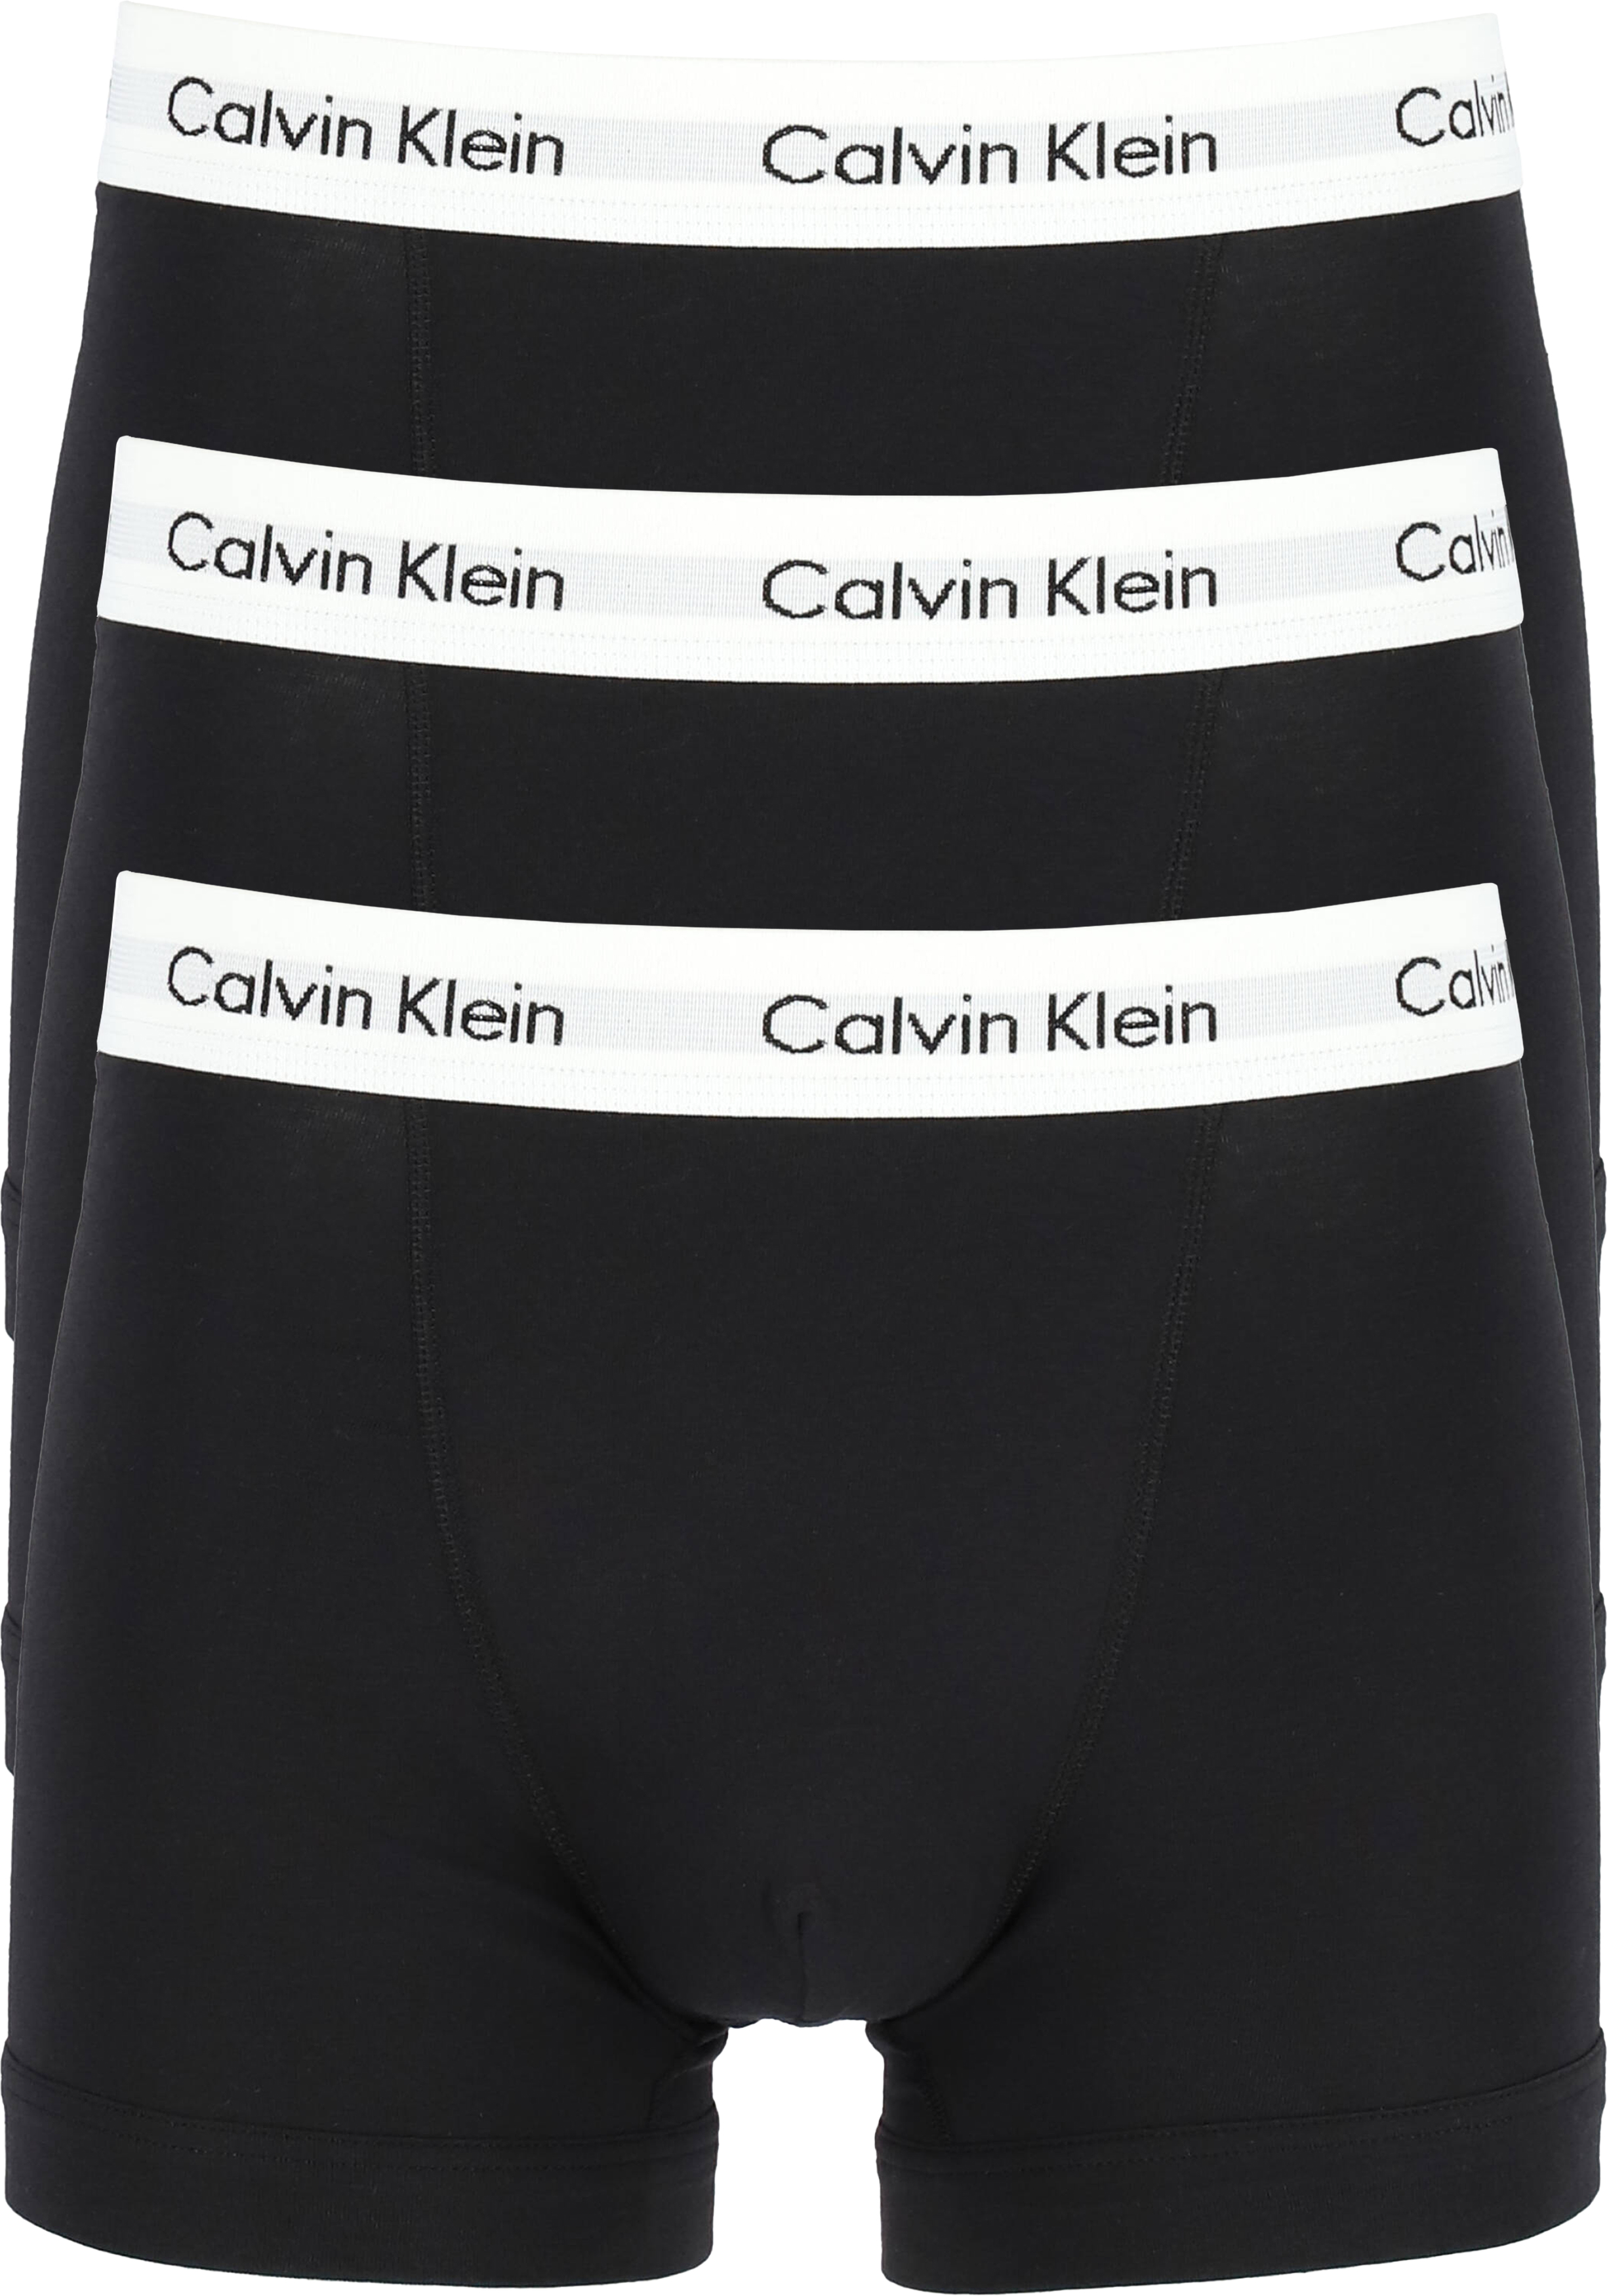 Treble ochtendgloren was Calvin Klein Trunks (3-pack), zwart - Gratis bezorgd